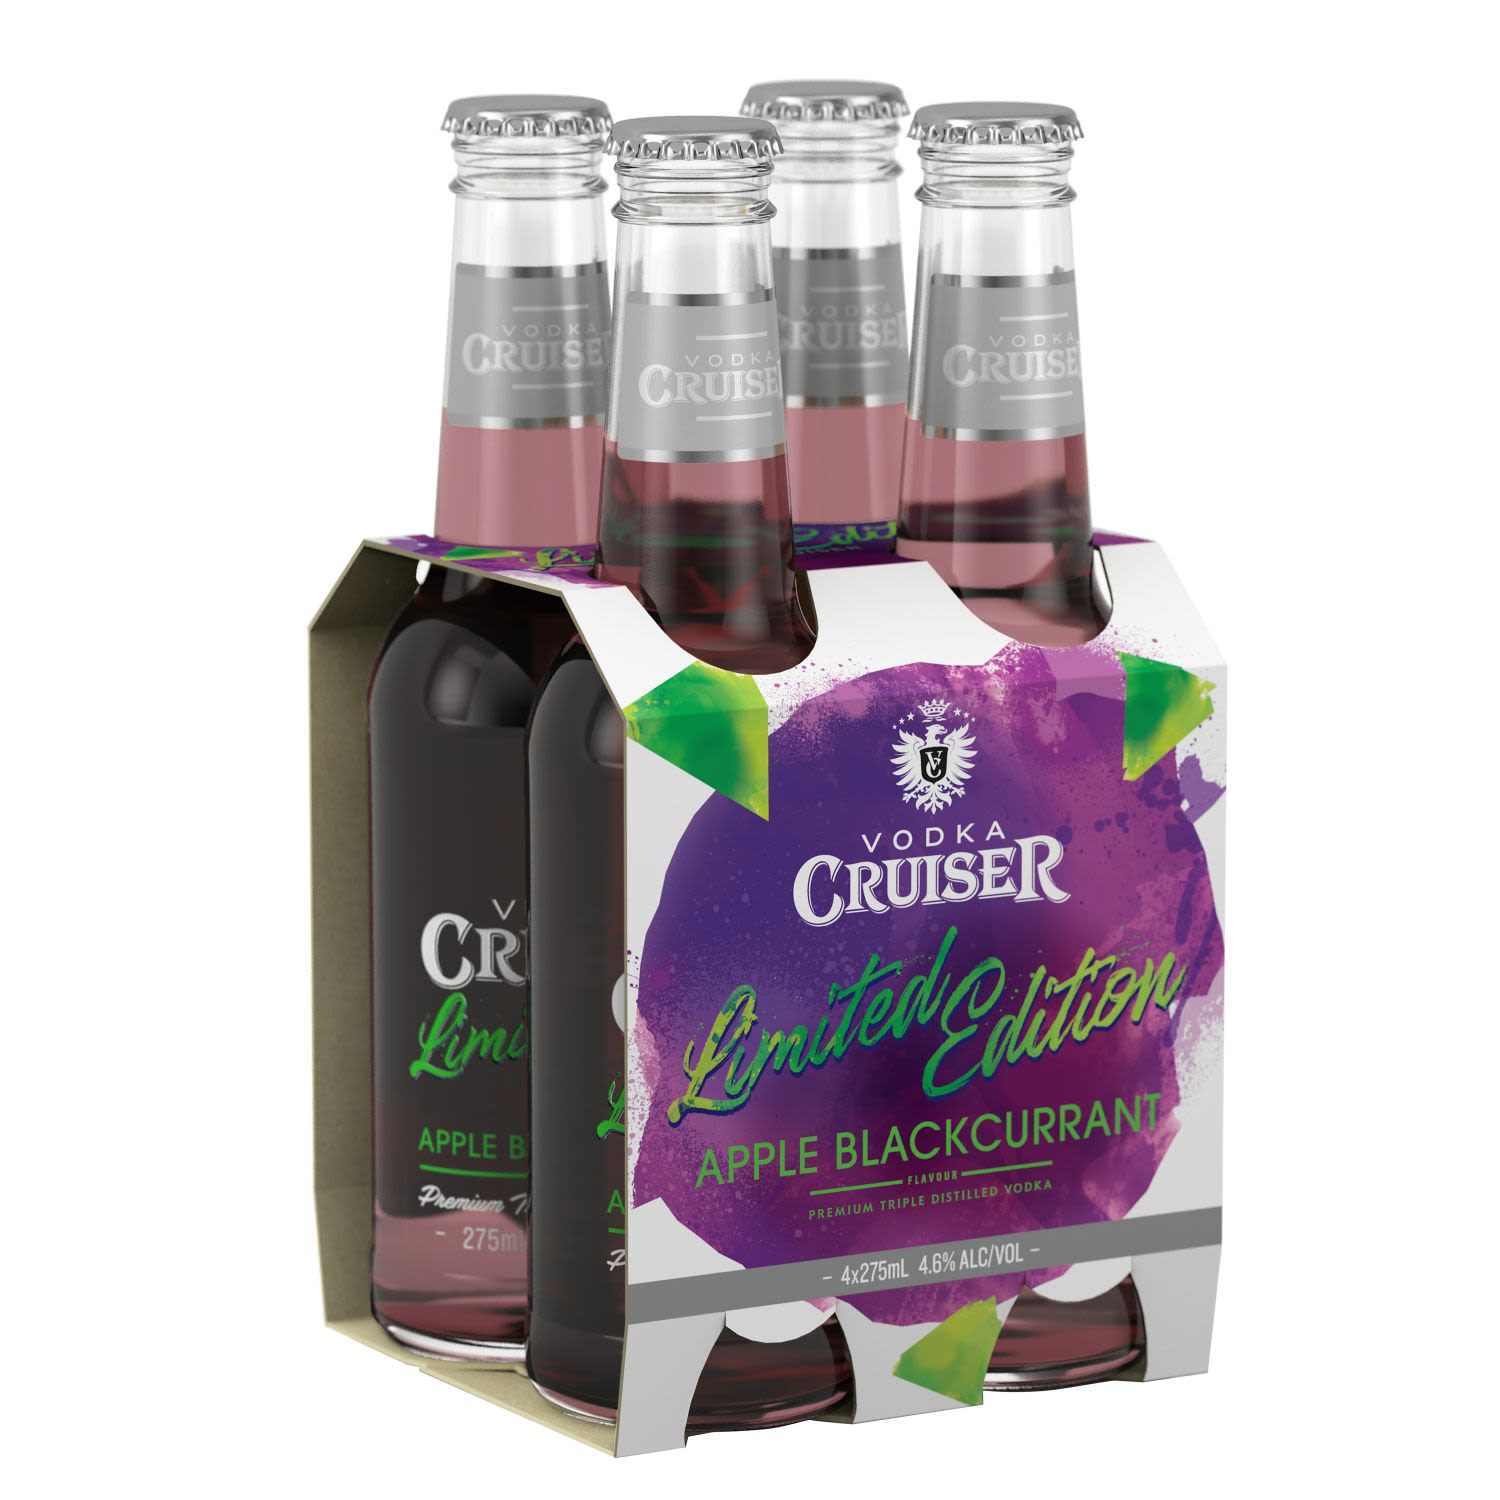 Vodka Cruiser Limited Edition Apple Blackcurrant Bottle 275mL 4 Pack